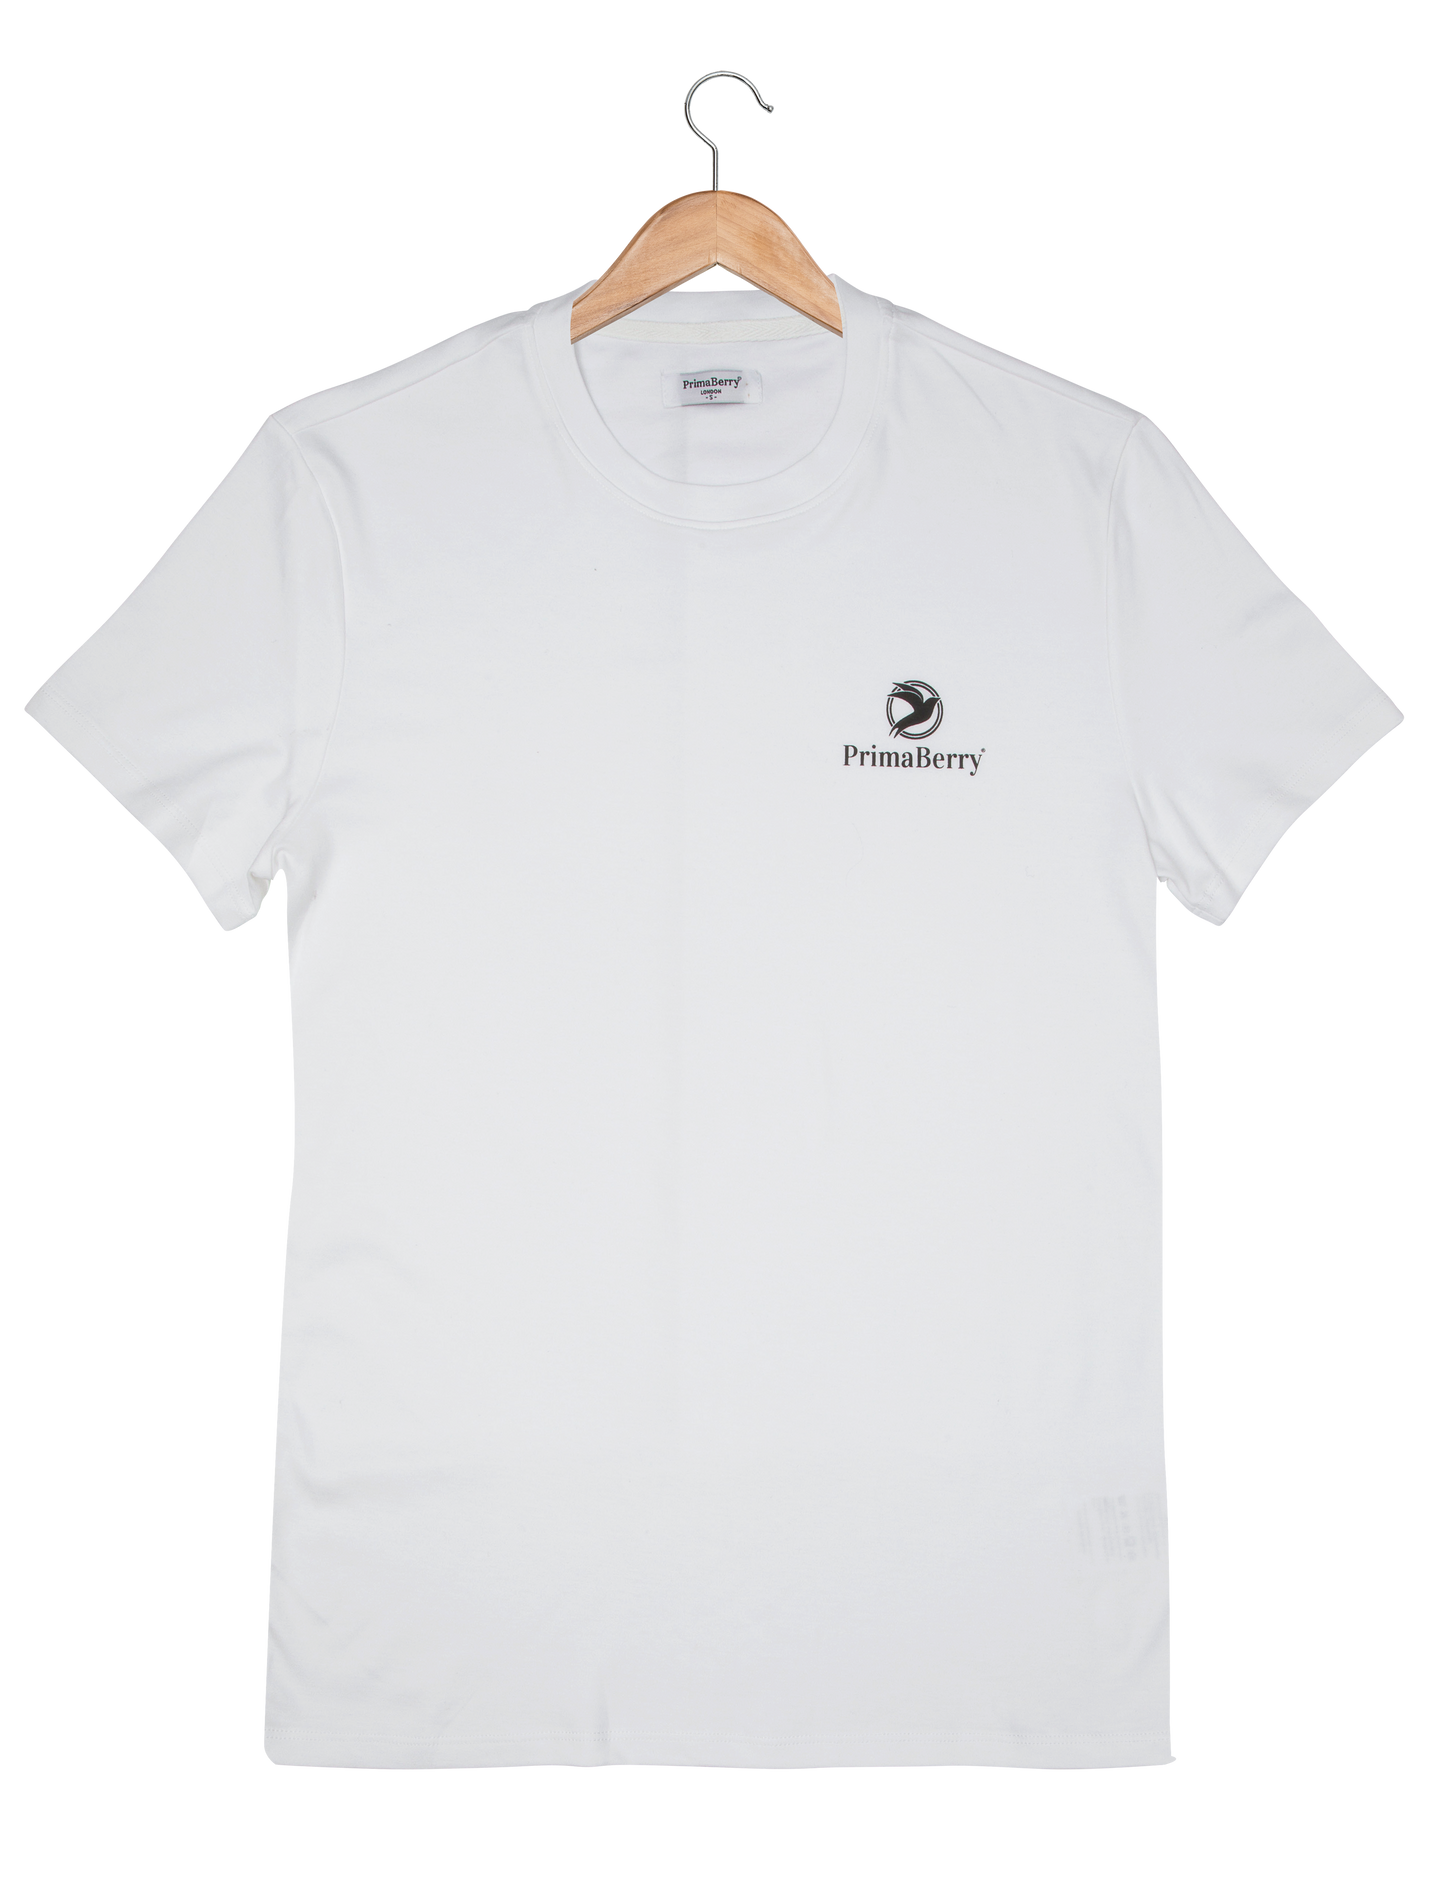 The Minimalist's Pima Cotton T-Shirt: Sustainable and Stylish T-Shirt Made with Premium Pima Cotton